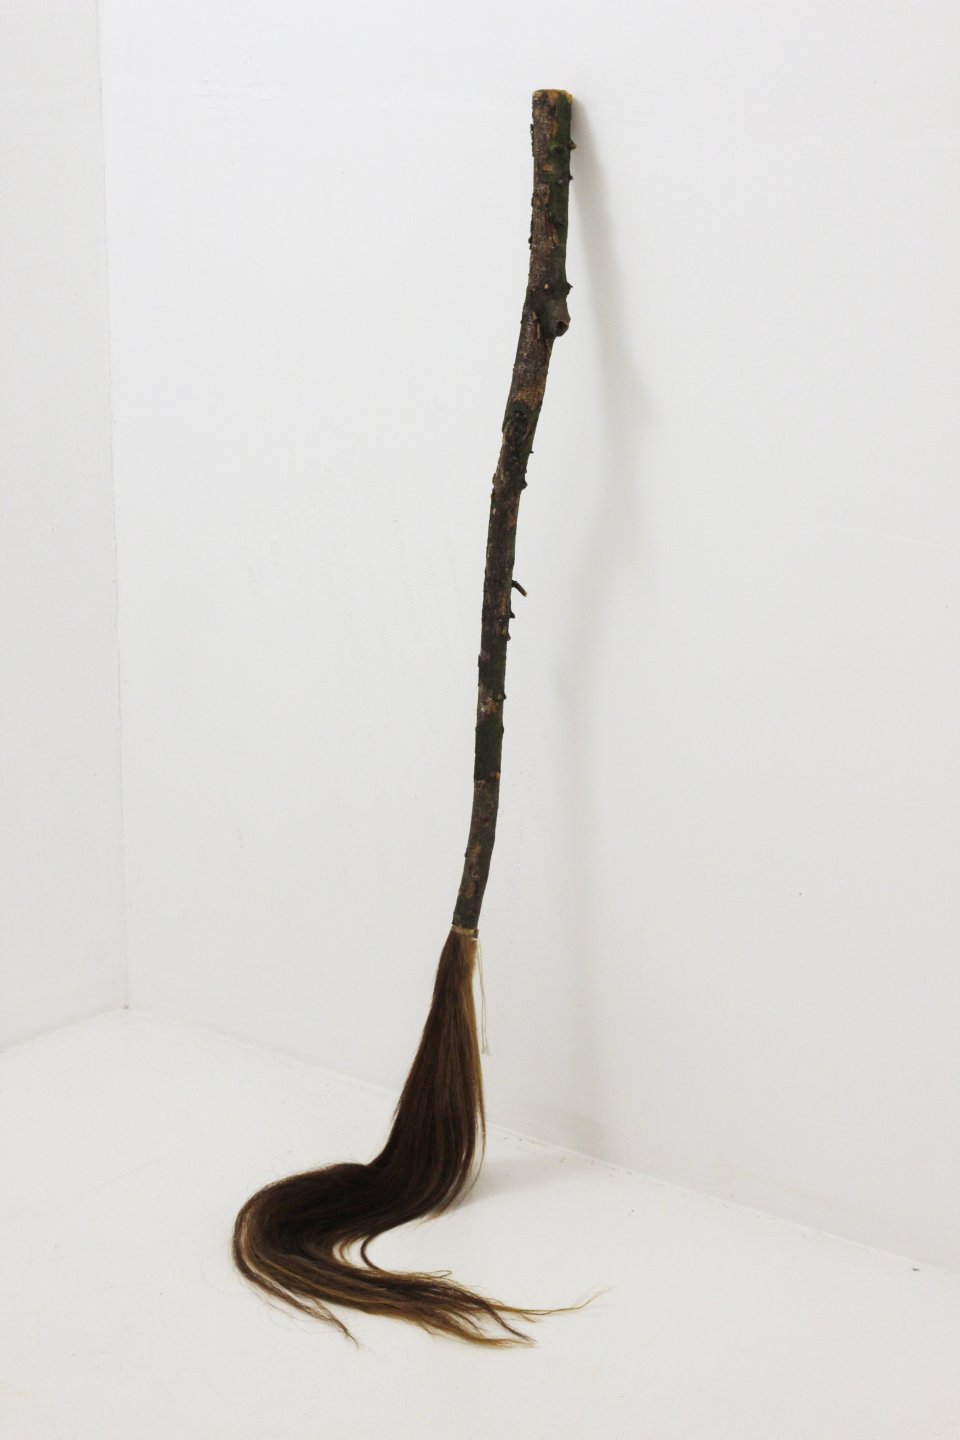 Galerie Benjamin Eck München ZSOFIA KOLLAR 'Enslaved', horse hair, wood, cotton rope, 180cm x 18cm x 12cm, 2017